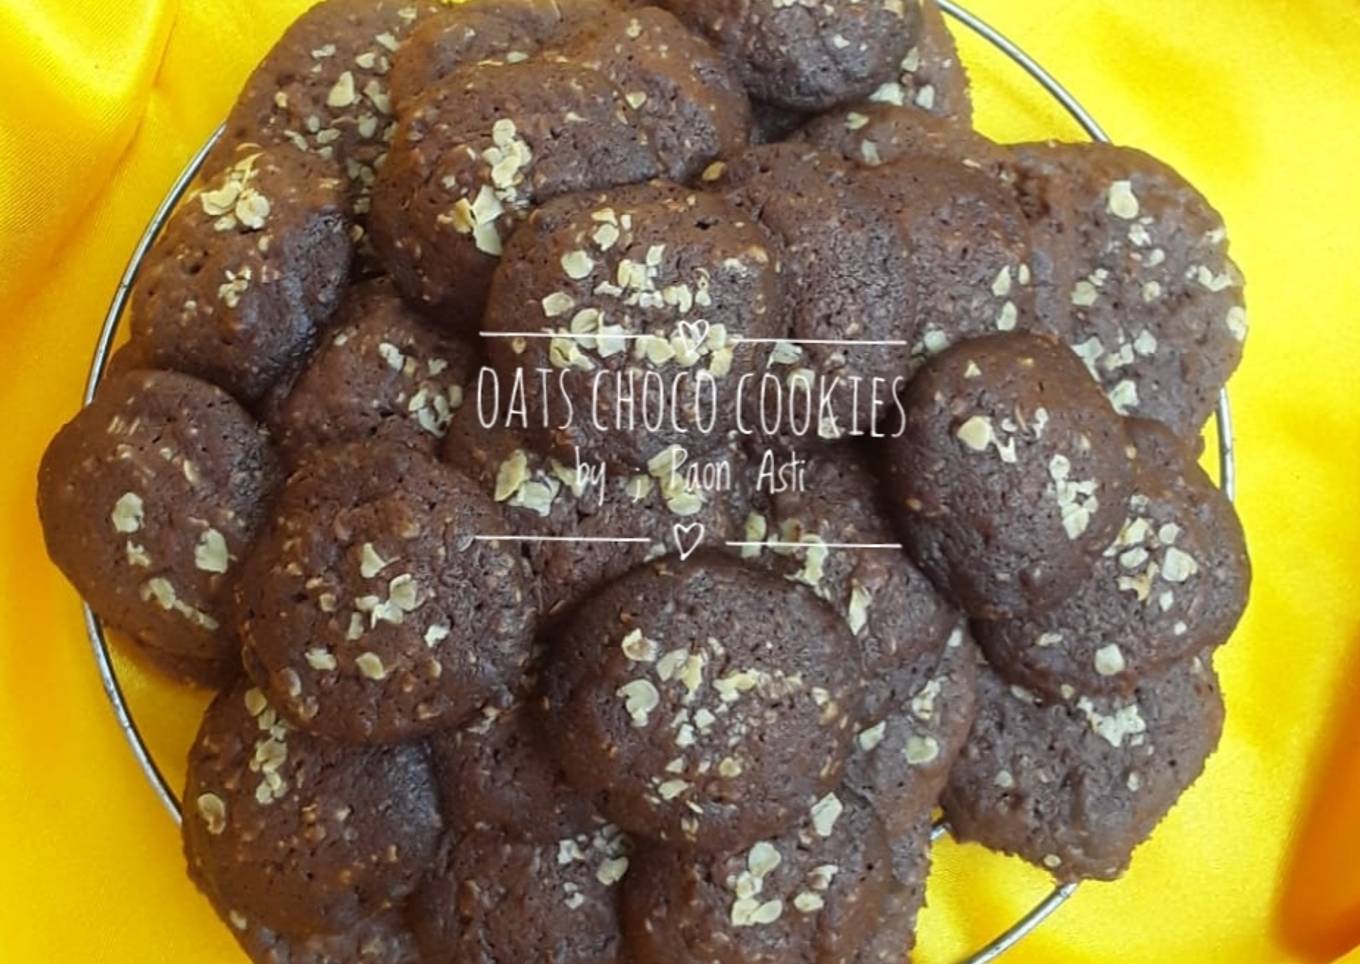 Oats Choco Cookies